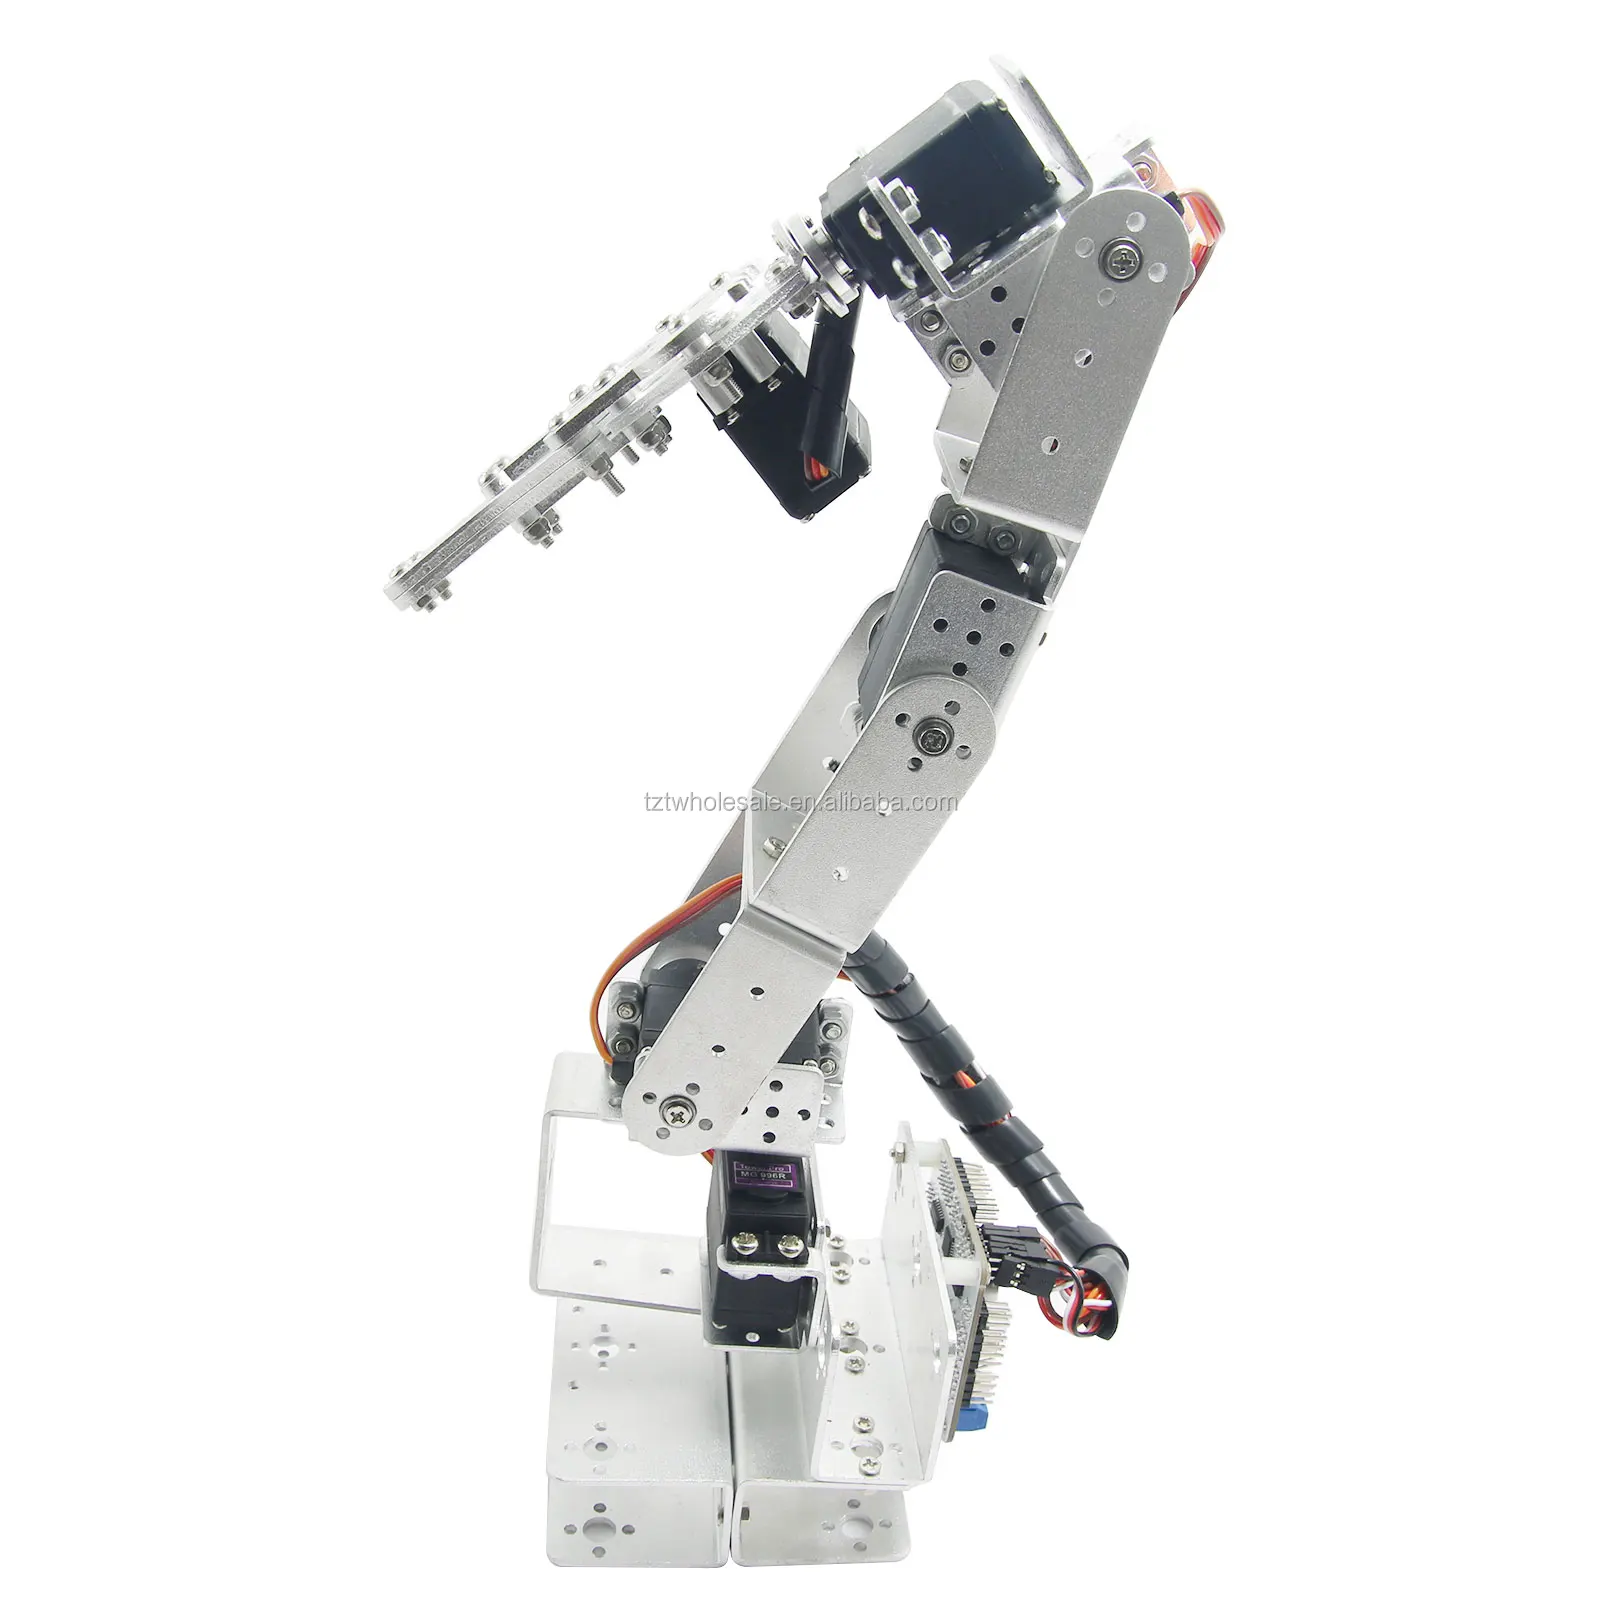 6DOF Mechanical Robotic Arm Clamp Claw Mount Aluminium Robot Arm For Arduino DIY 